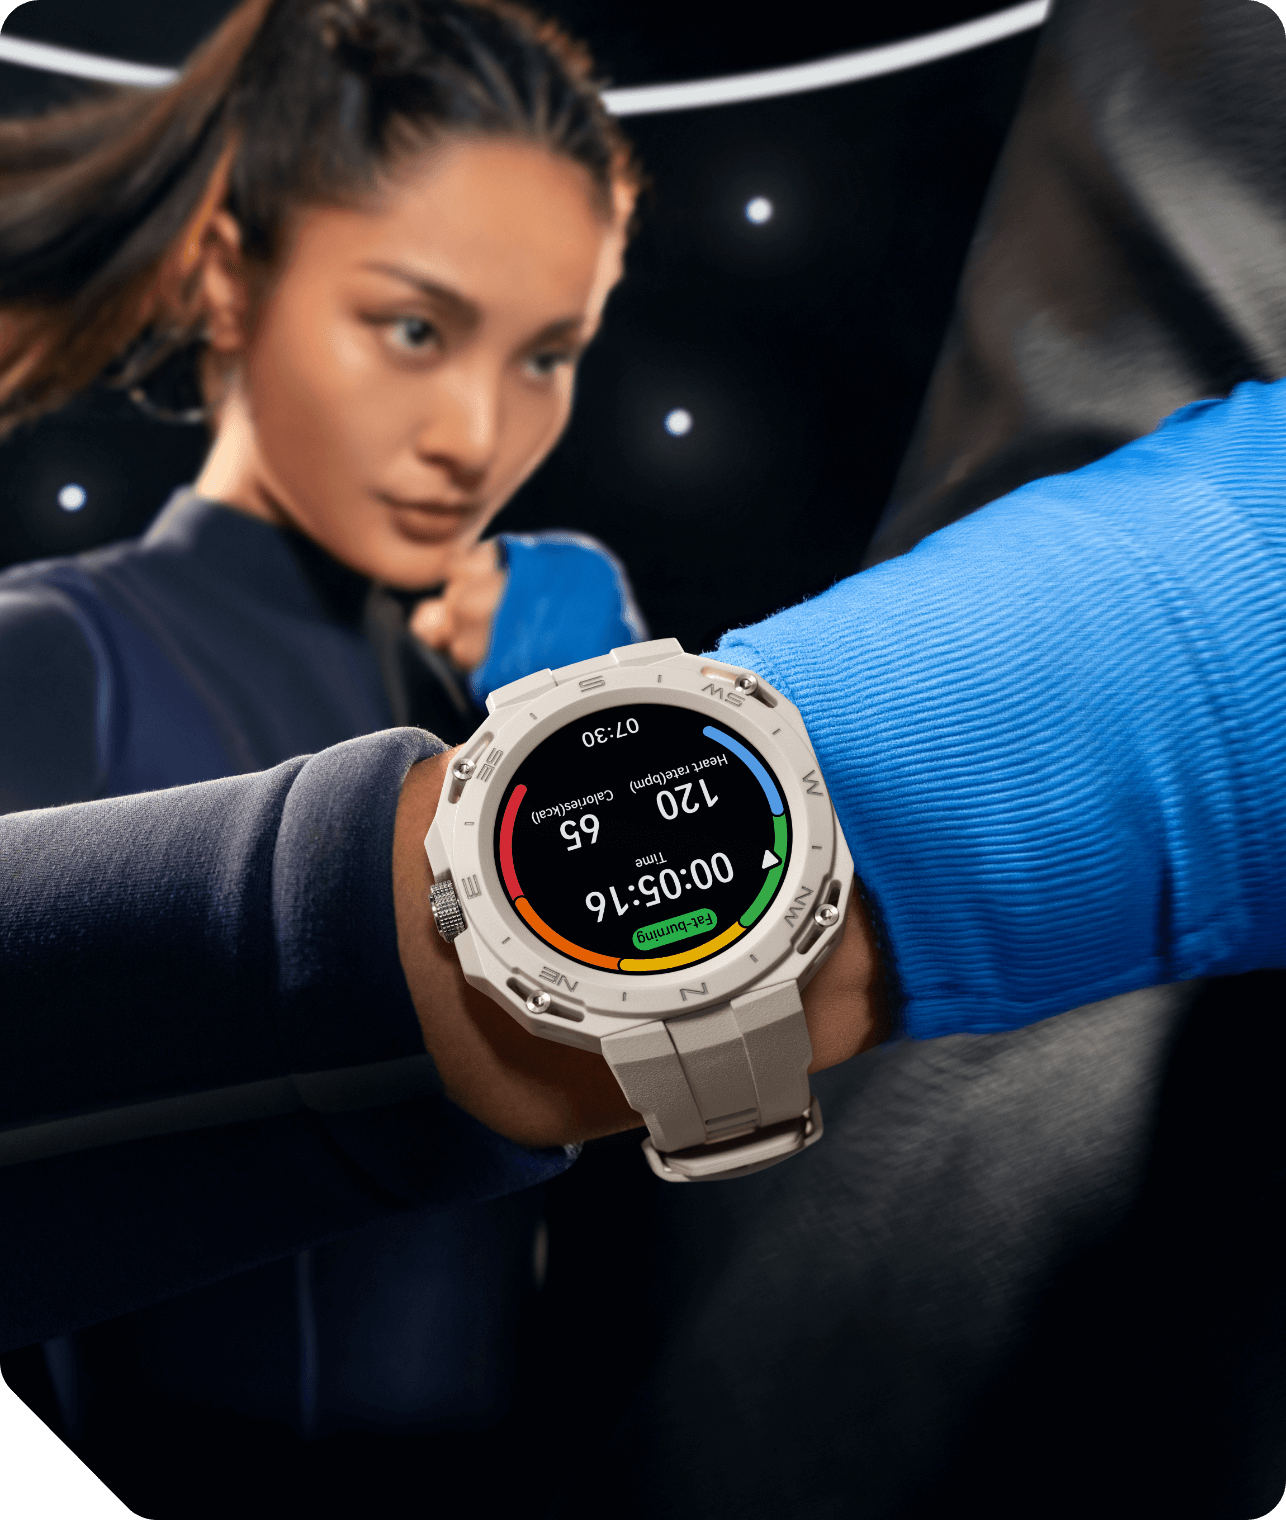  Huawei Watch GT GPS Running Watch with Heart Rate